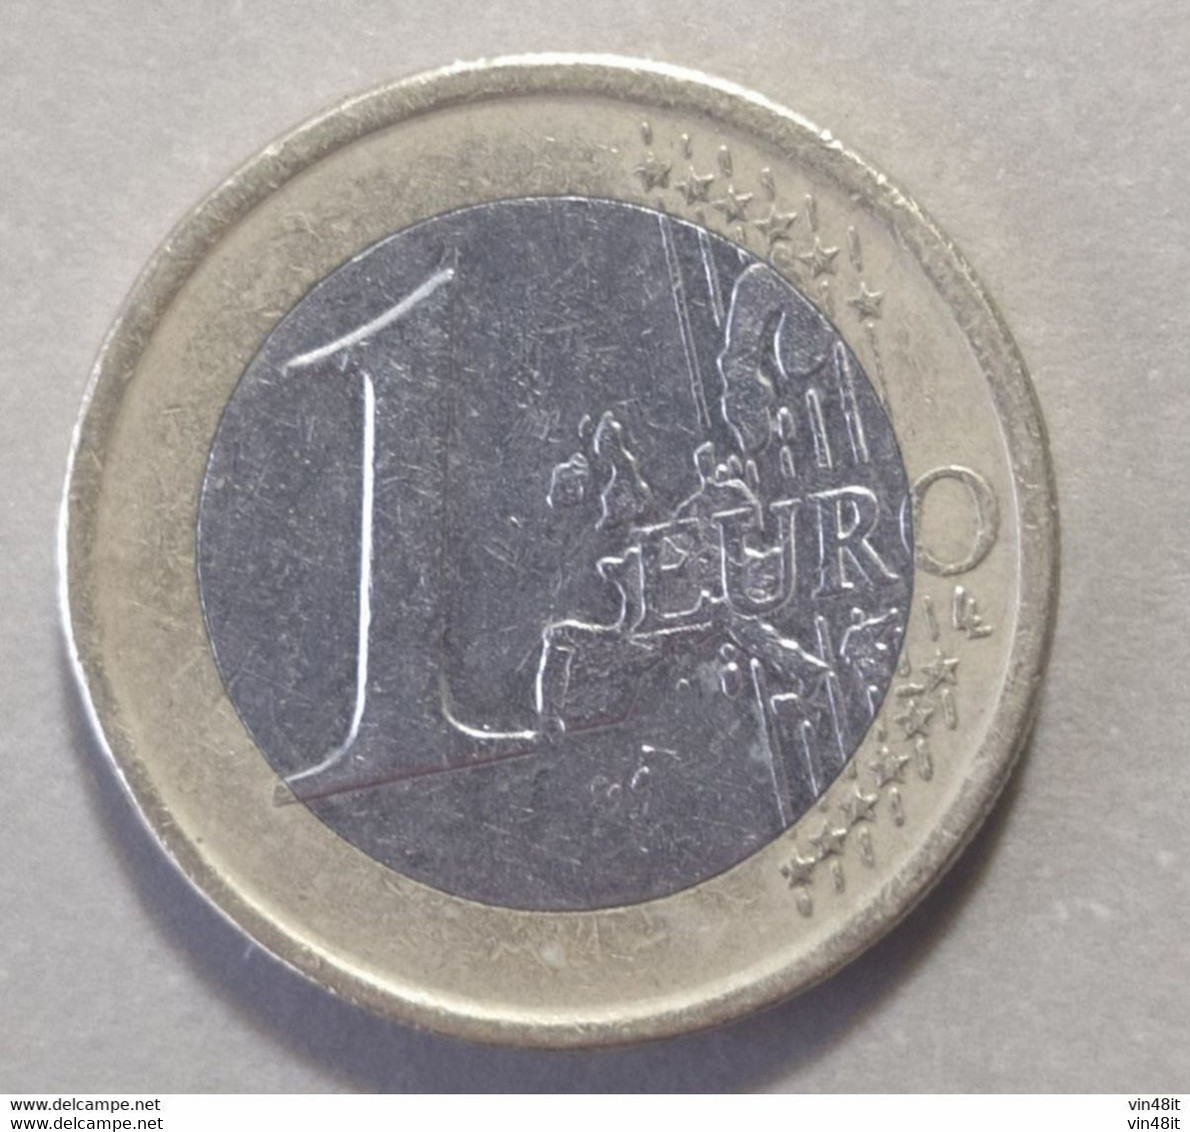 2011 - BELGIO - MONETA IN EURO - DEL VALORE DI  1,00  EURO - USATA - Belgio